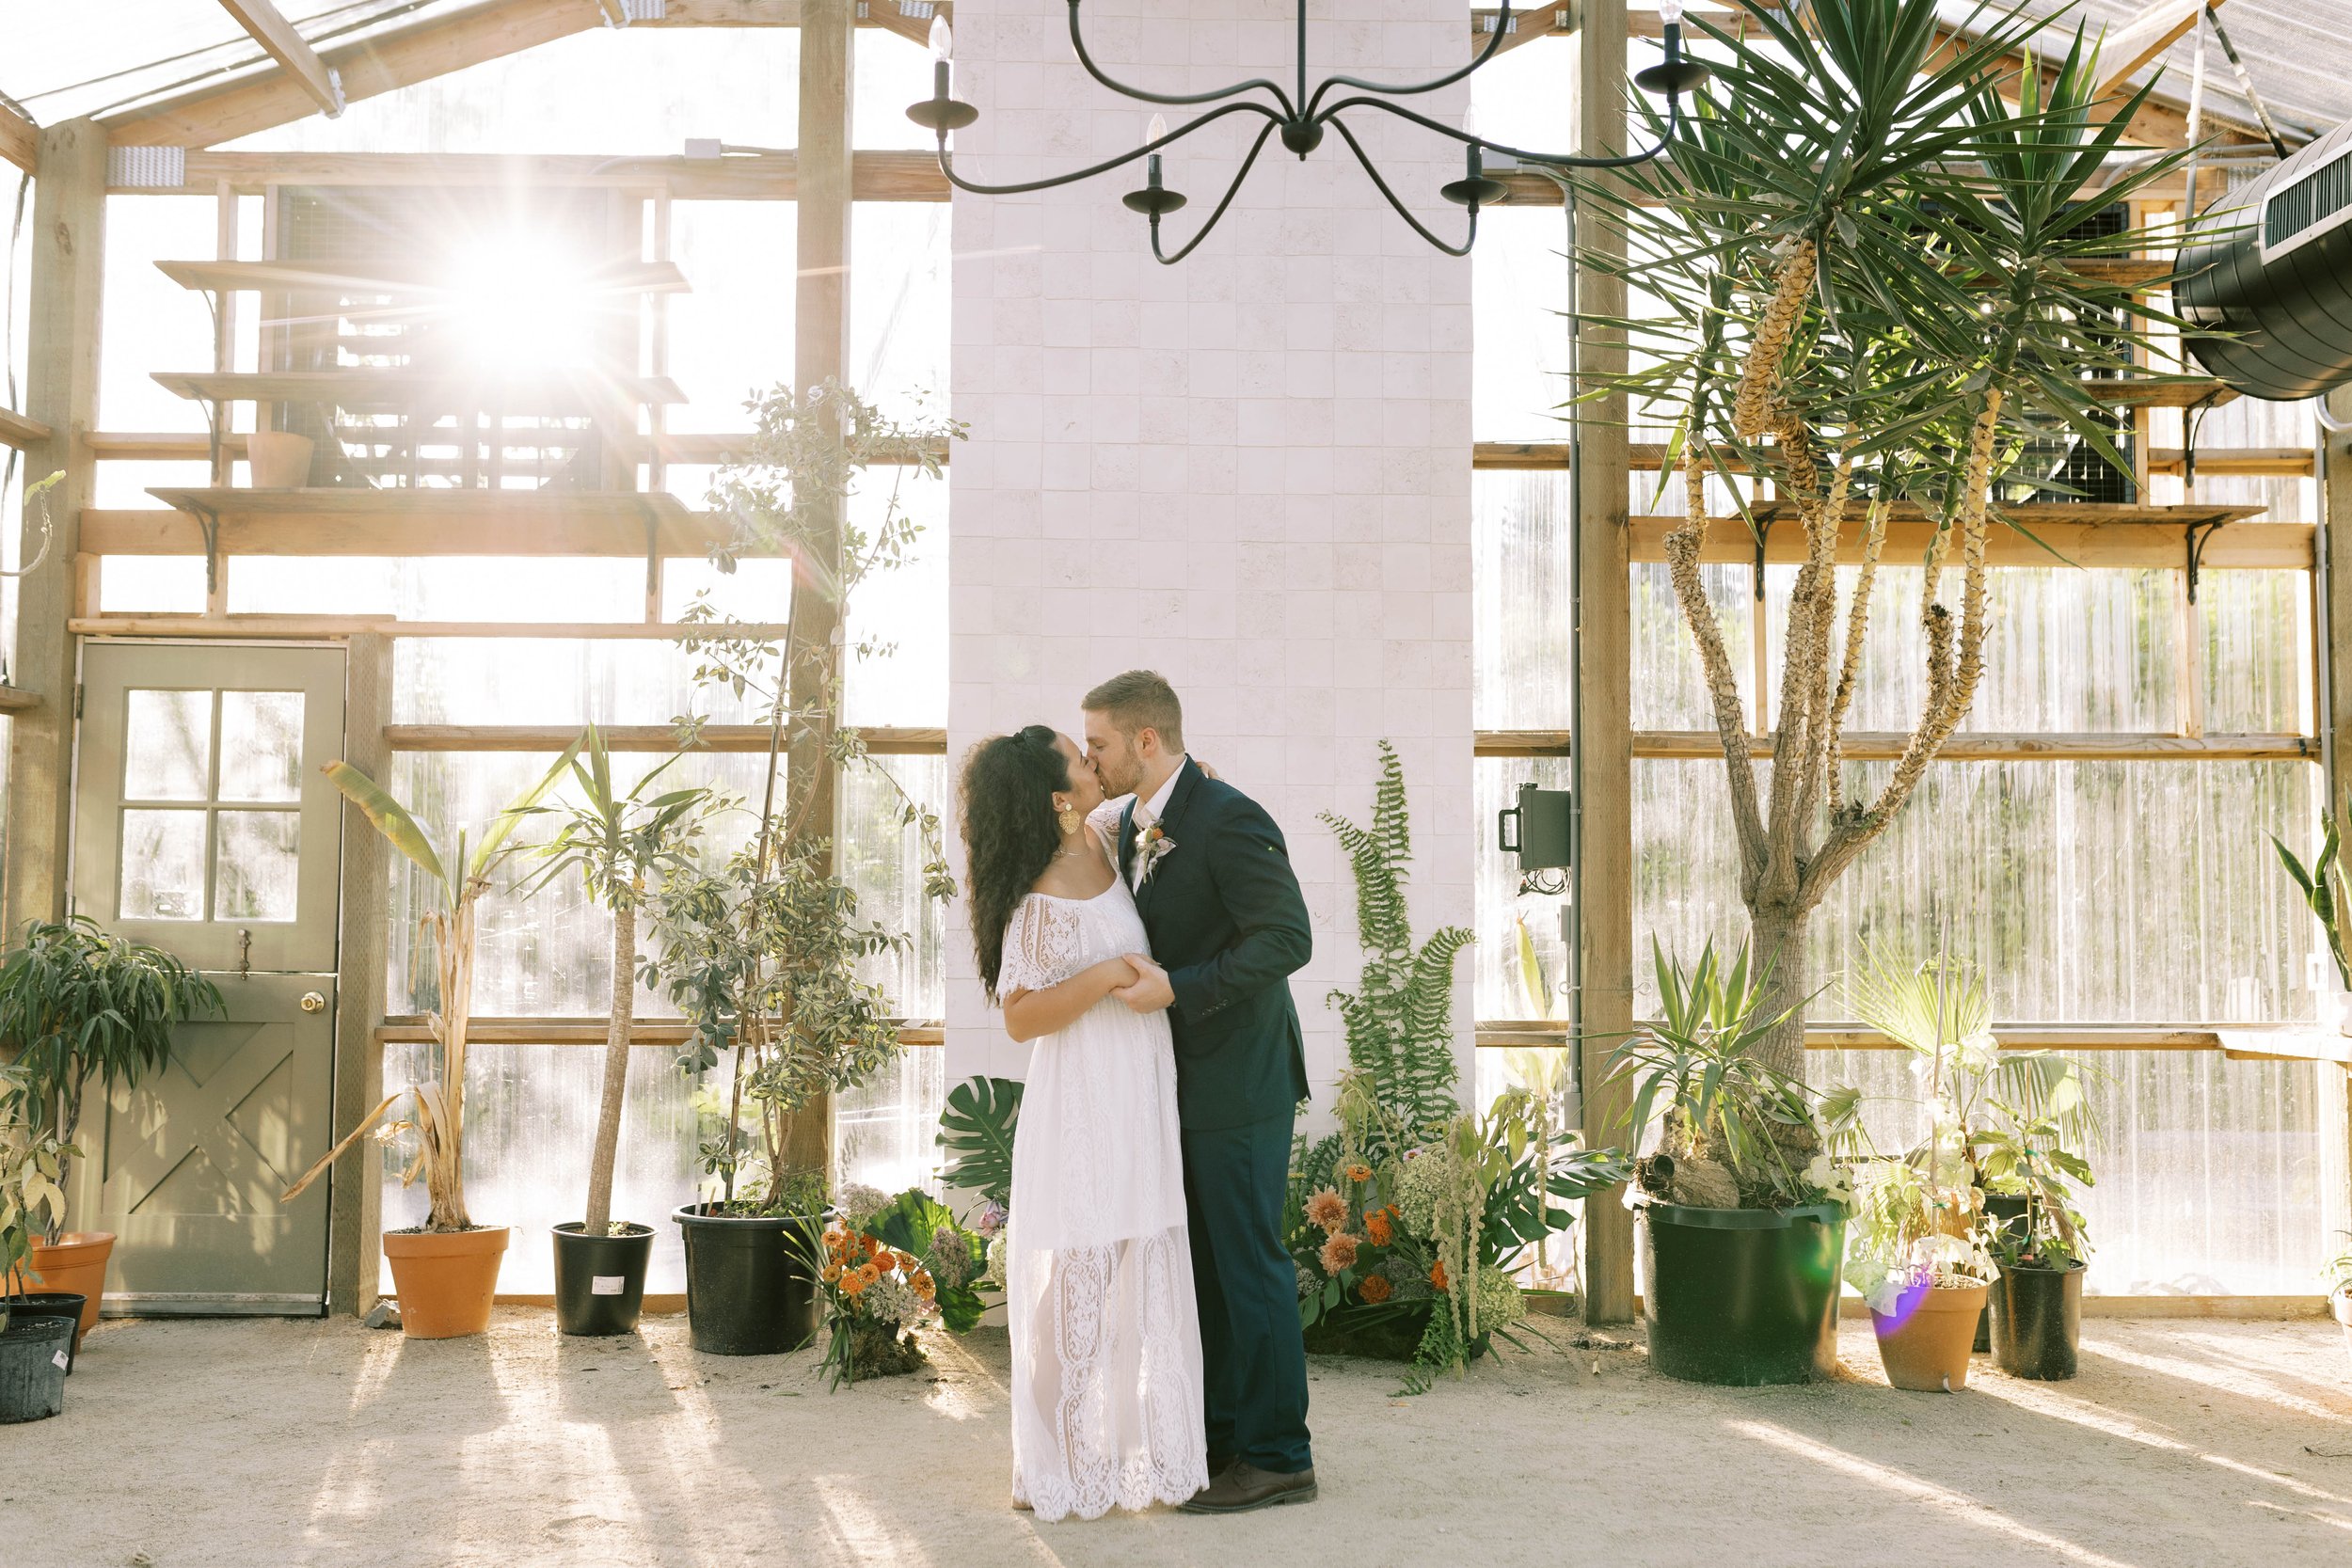  Boho chic modern greenhouse oregon summer wedding, pastels, colorful, romantic 